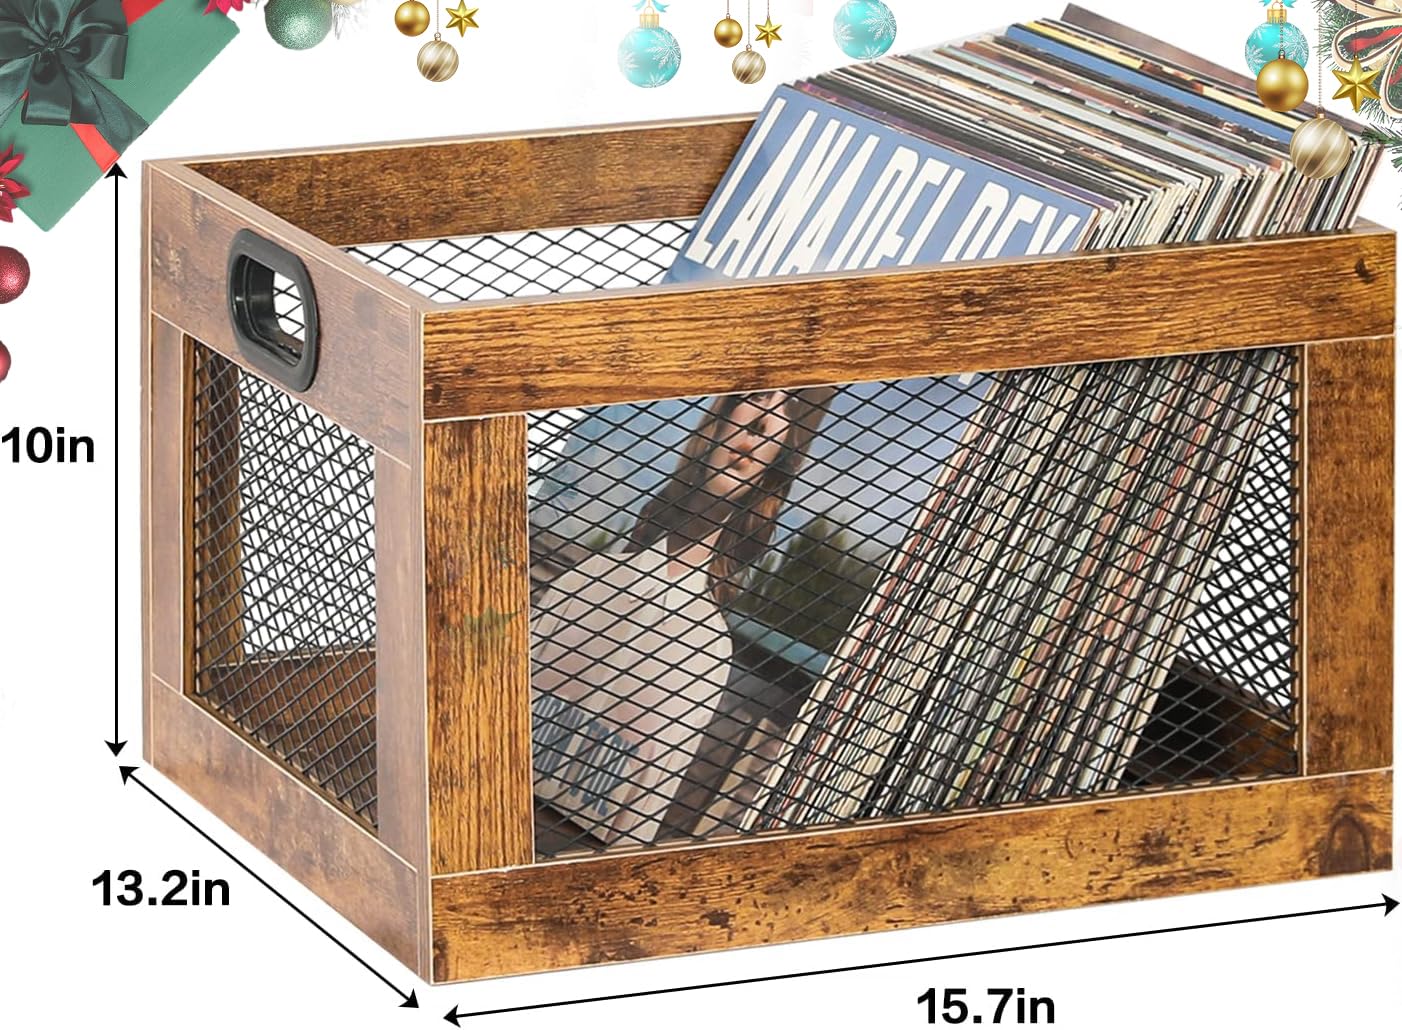 3IngSeagulls Caja de almacenamiento de discos de vinilo, soporte para discos de madera, organizador de discos de cubo clásico, almacenamiento de más de 100 discos, soporte para discos de vinilo de color marrón para álbumes, súper fácil de montar